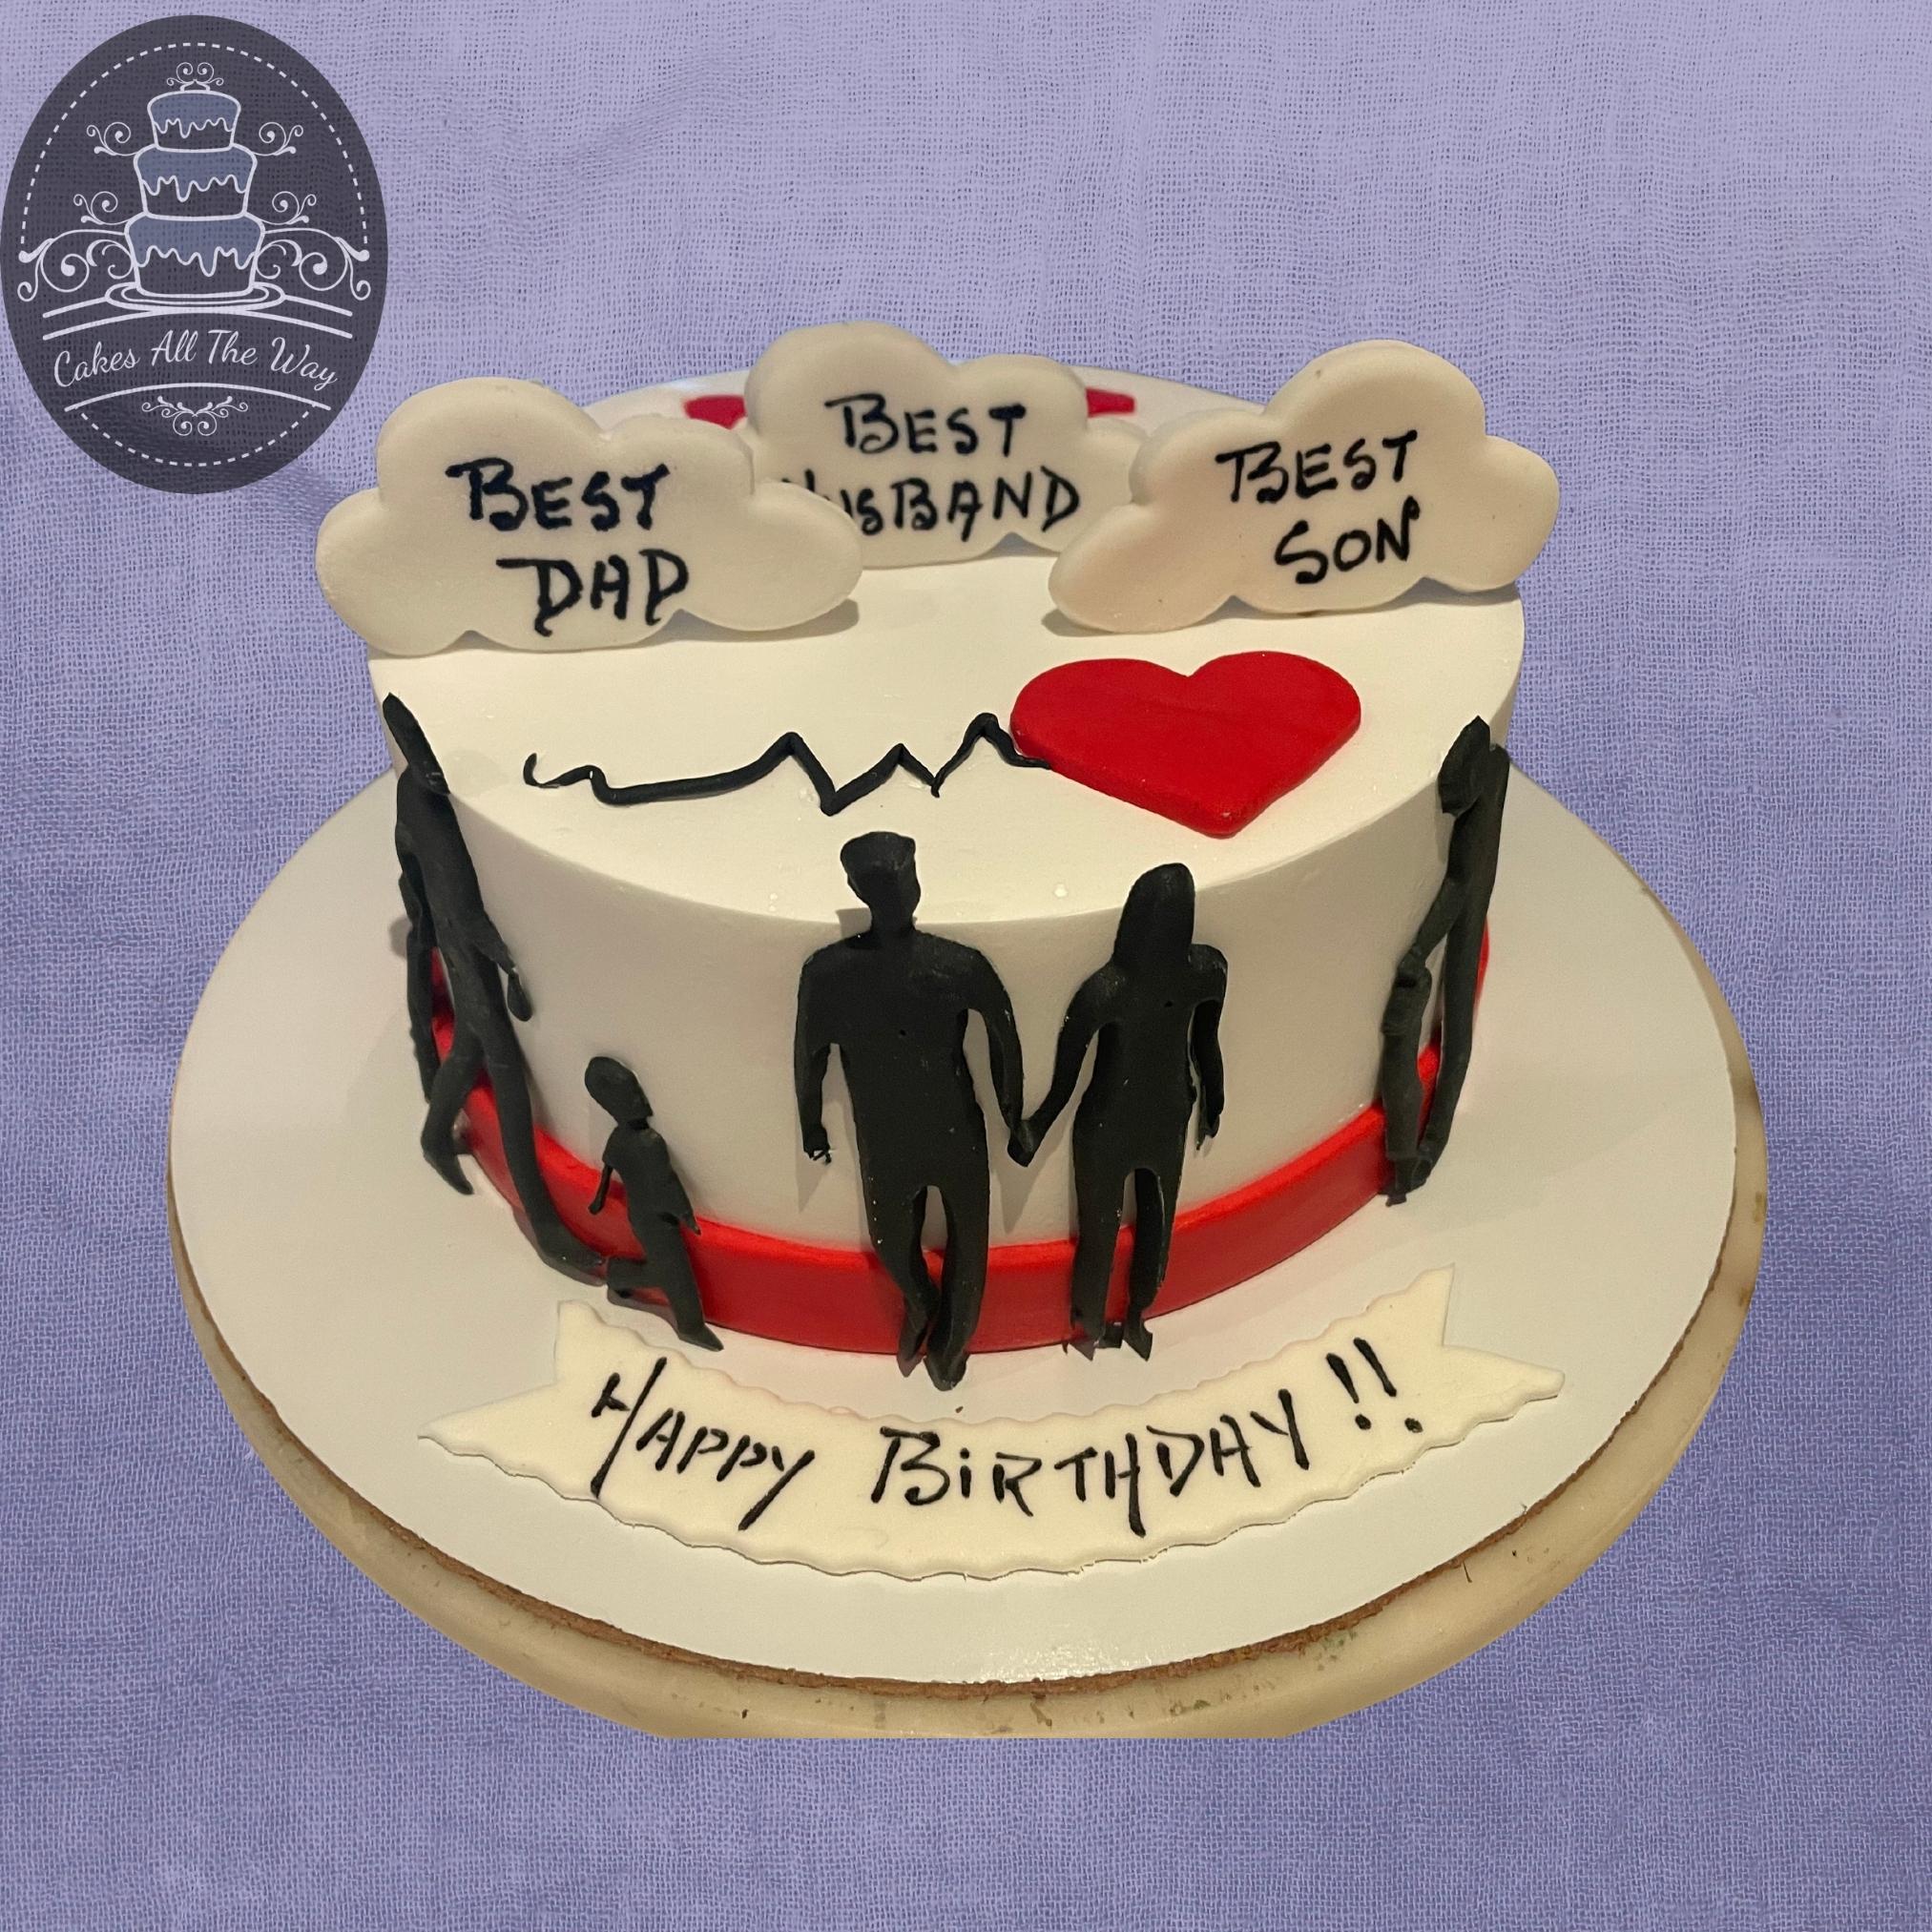 Best Dad Cake - Your Koseli Celebrations